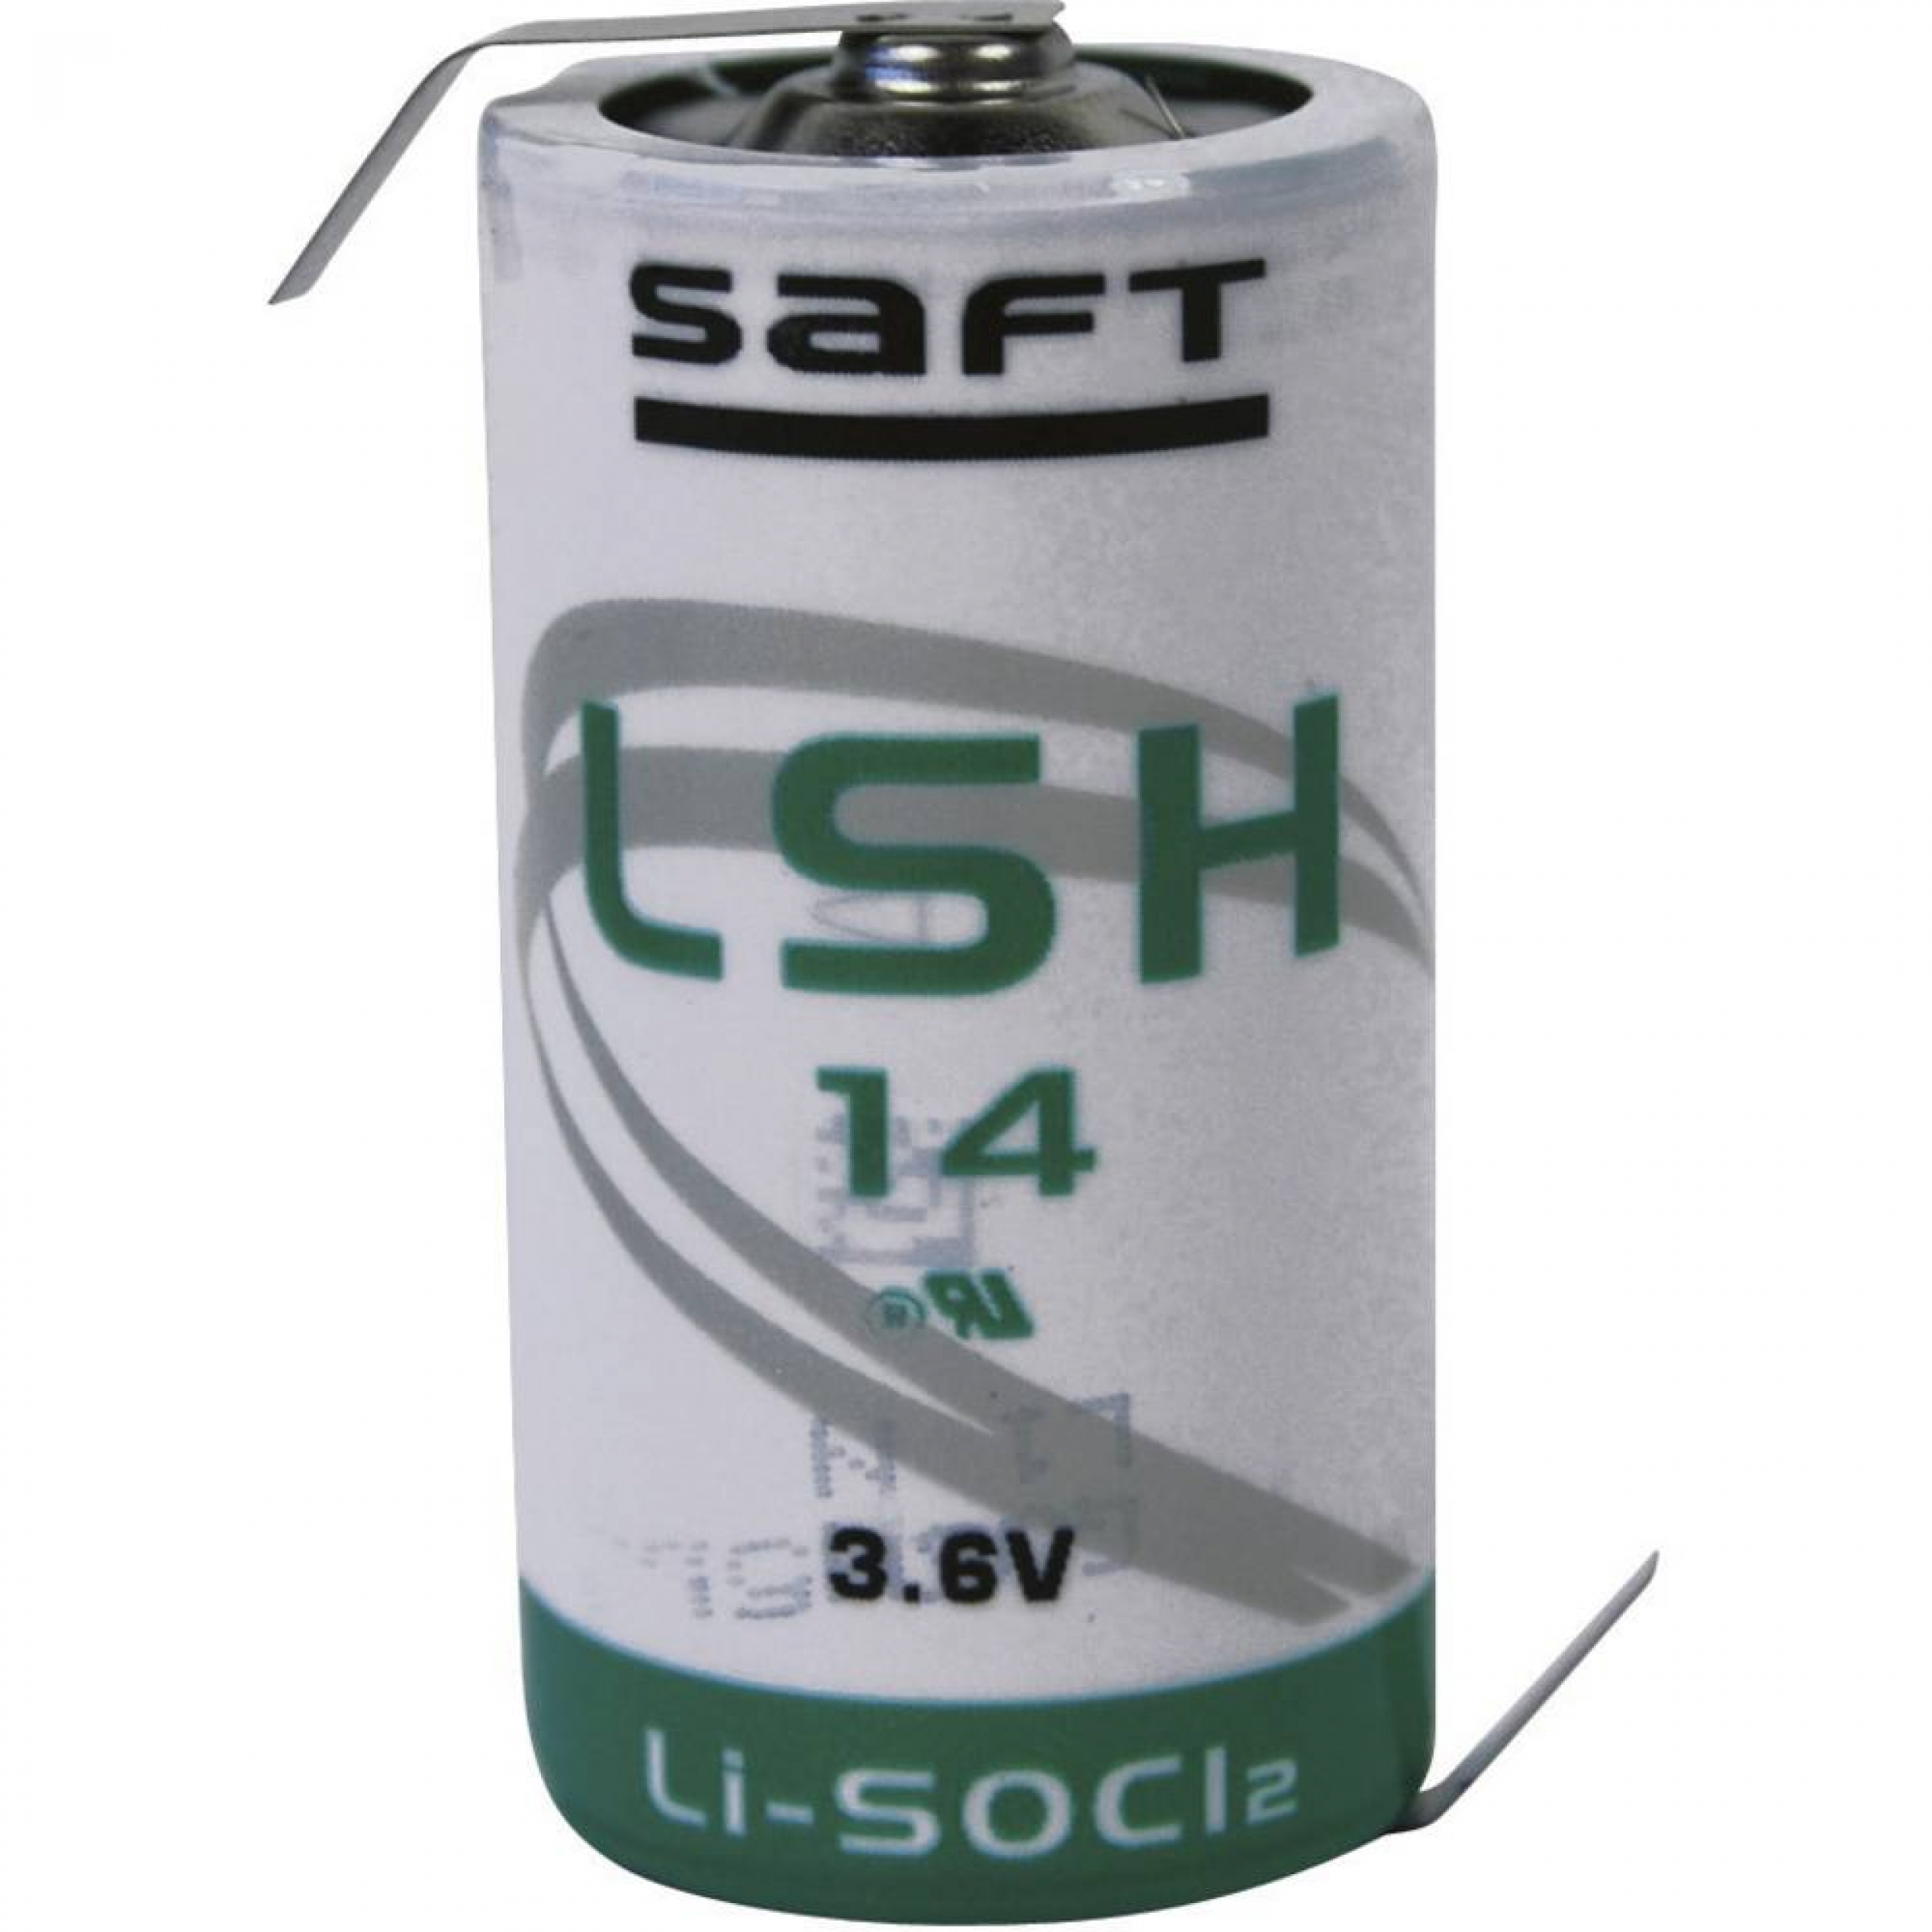 Saft LSH 14 C Lithium-Thionylchlorid 3,6V -